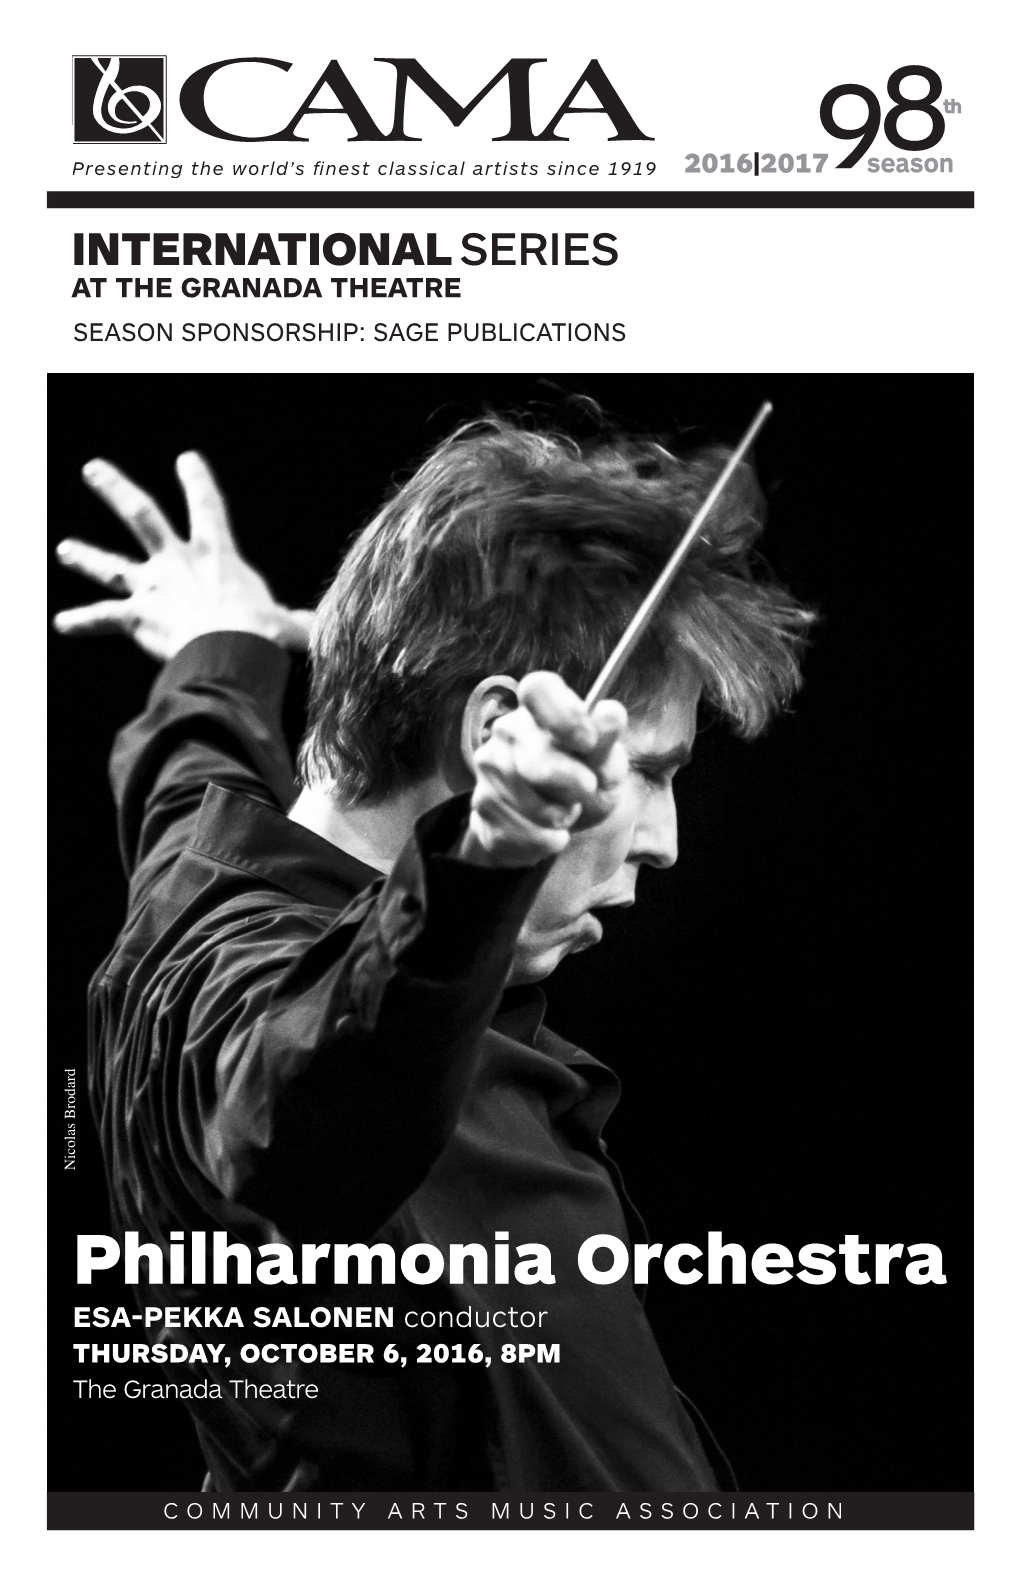 Philharmonia Orchestra ESA-PEKKA SALONEN Conductor THURSDAY, OCTOBER 6, 2016, 8PM the Granada Theatre